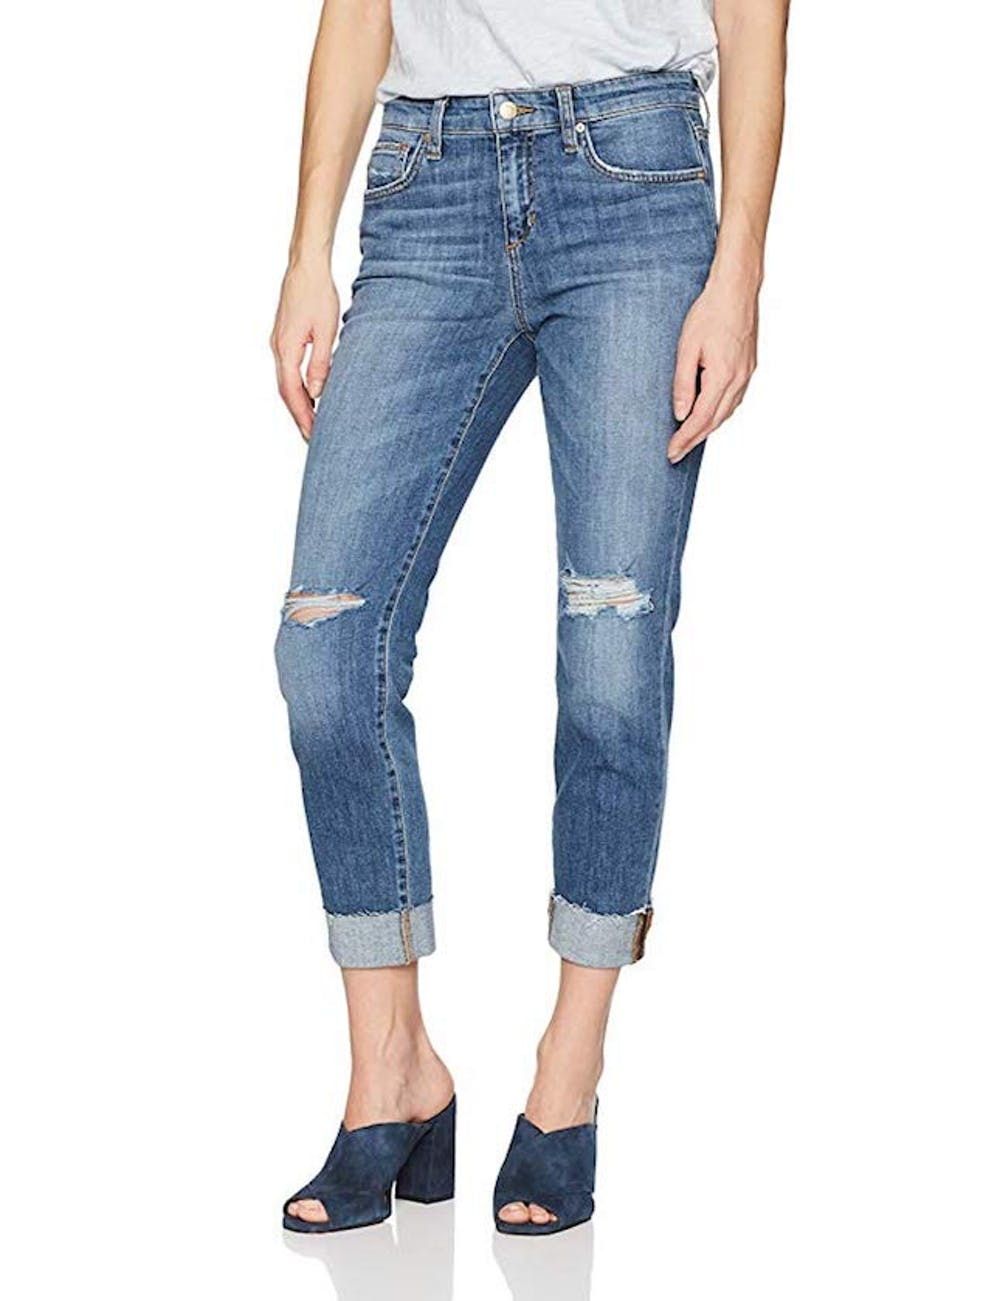 best skinny jeans on amazon